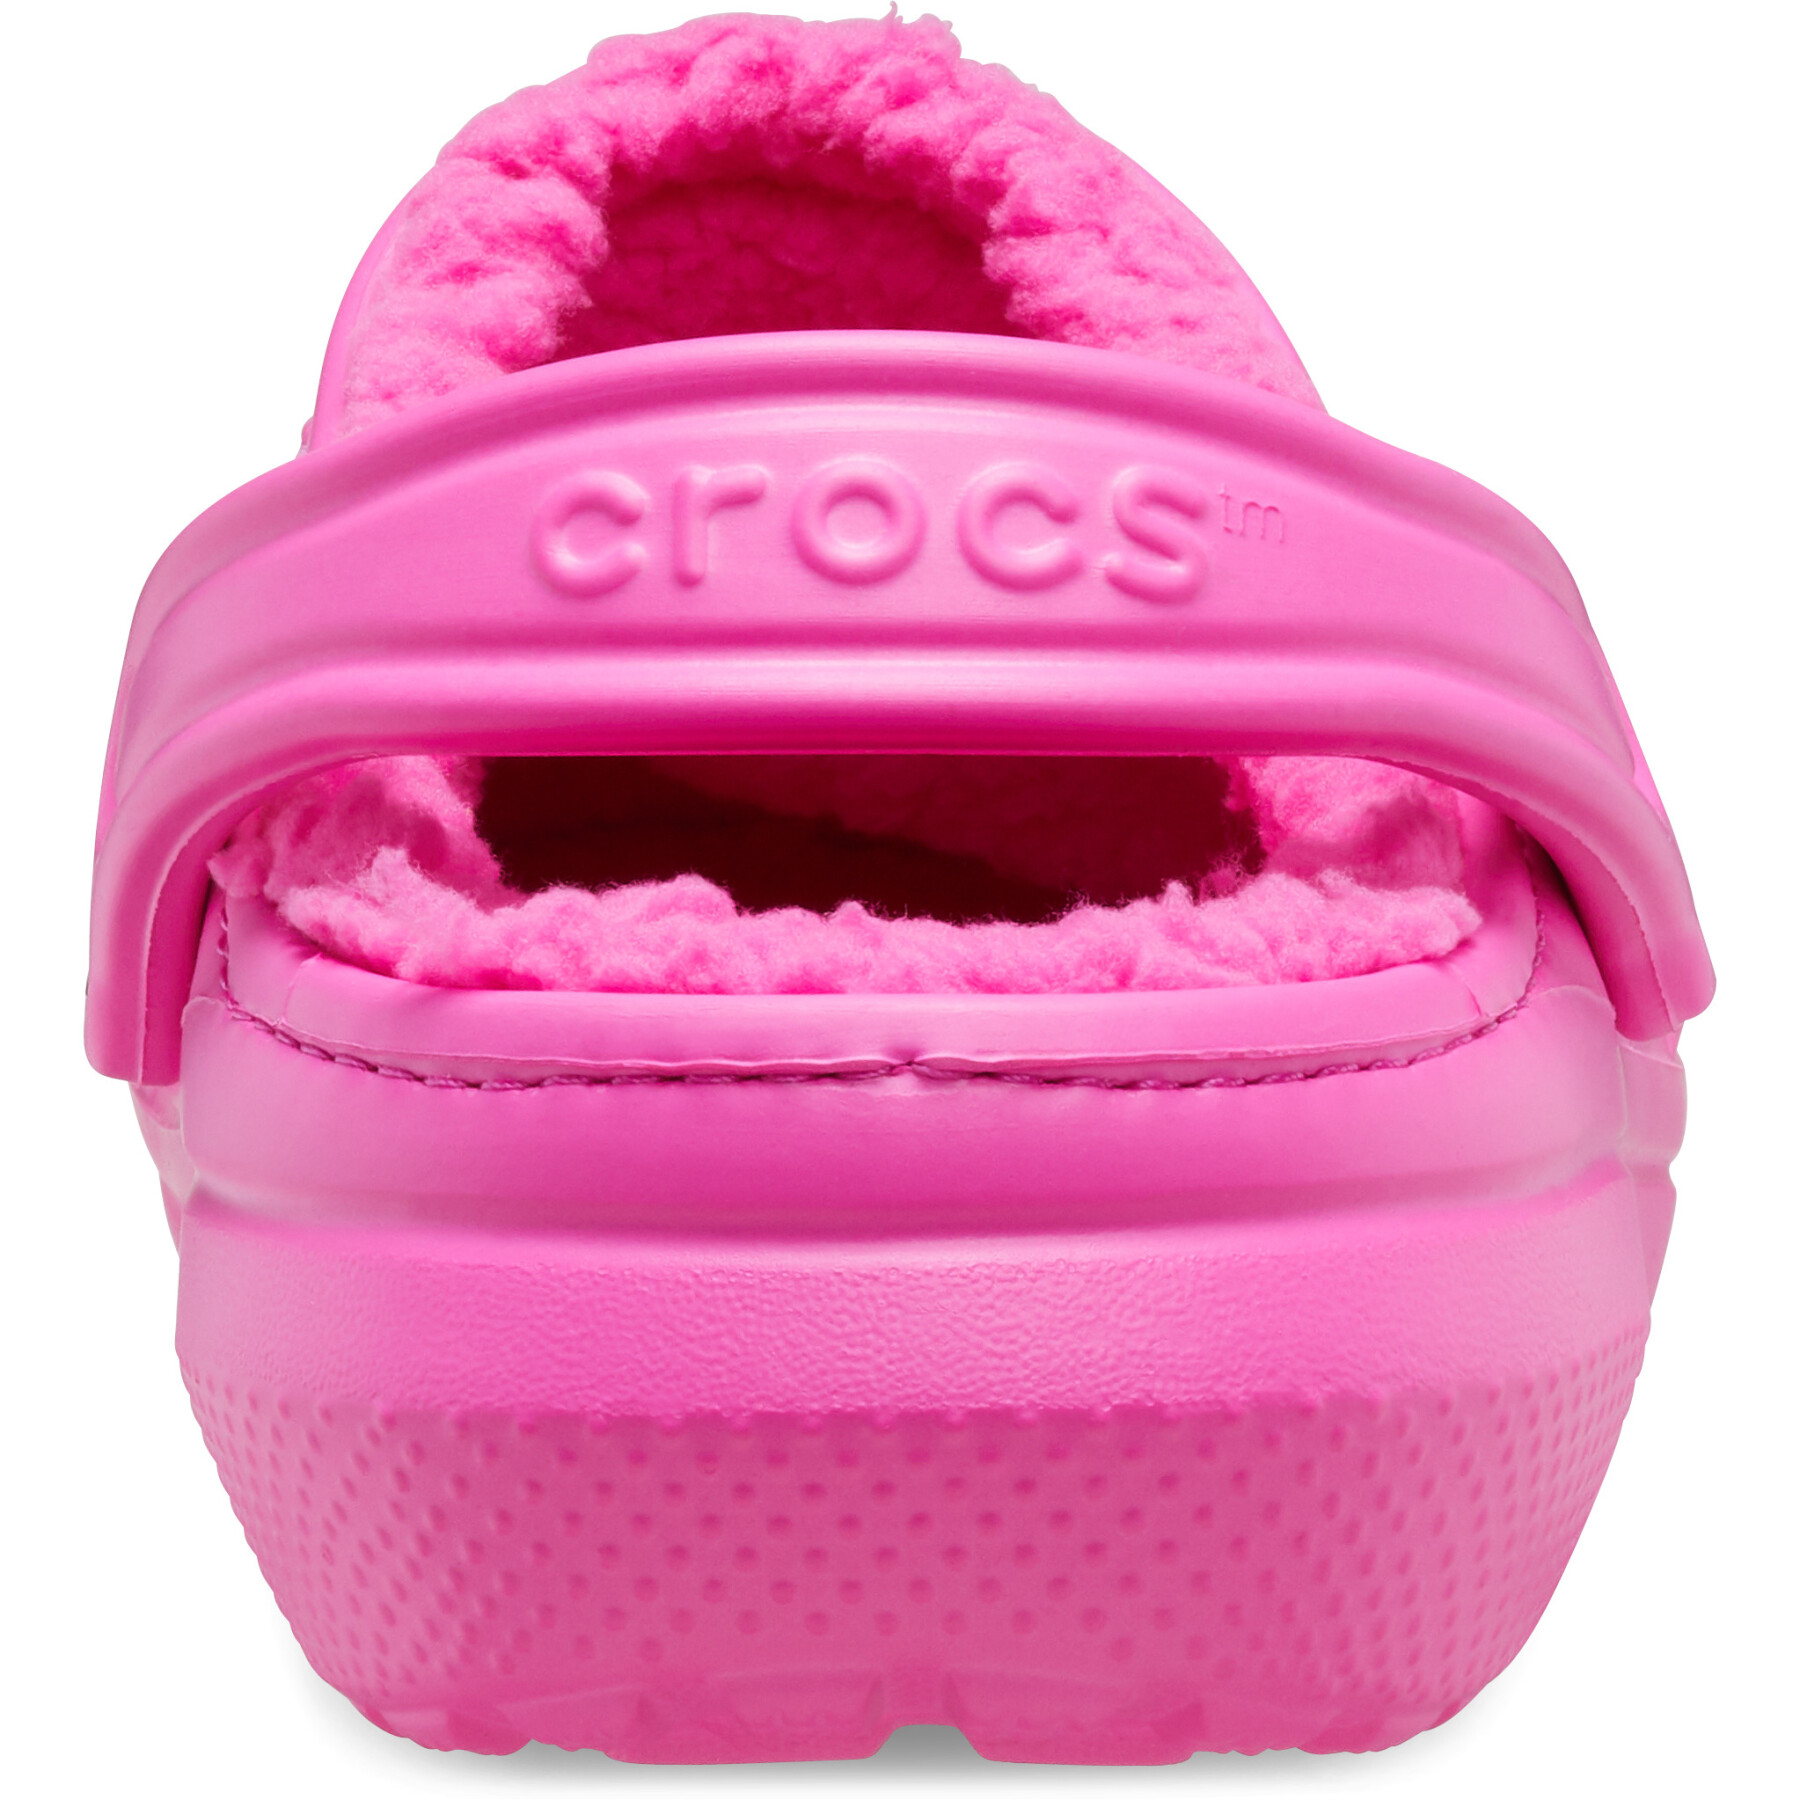 Crocs classic fuzz lined clog